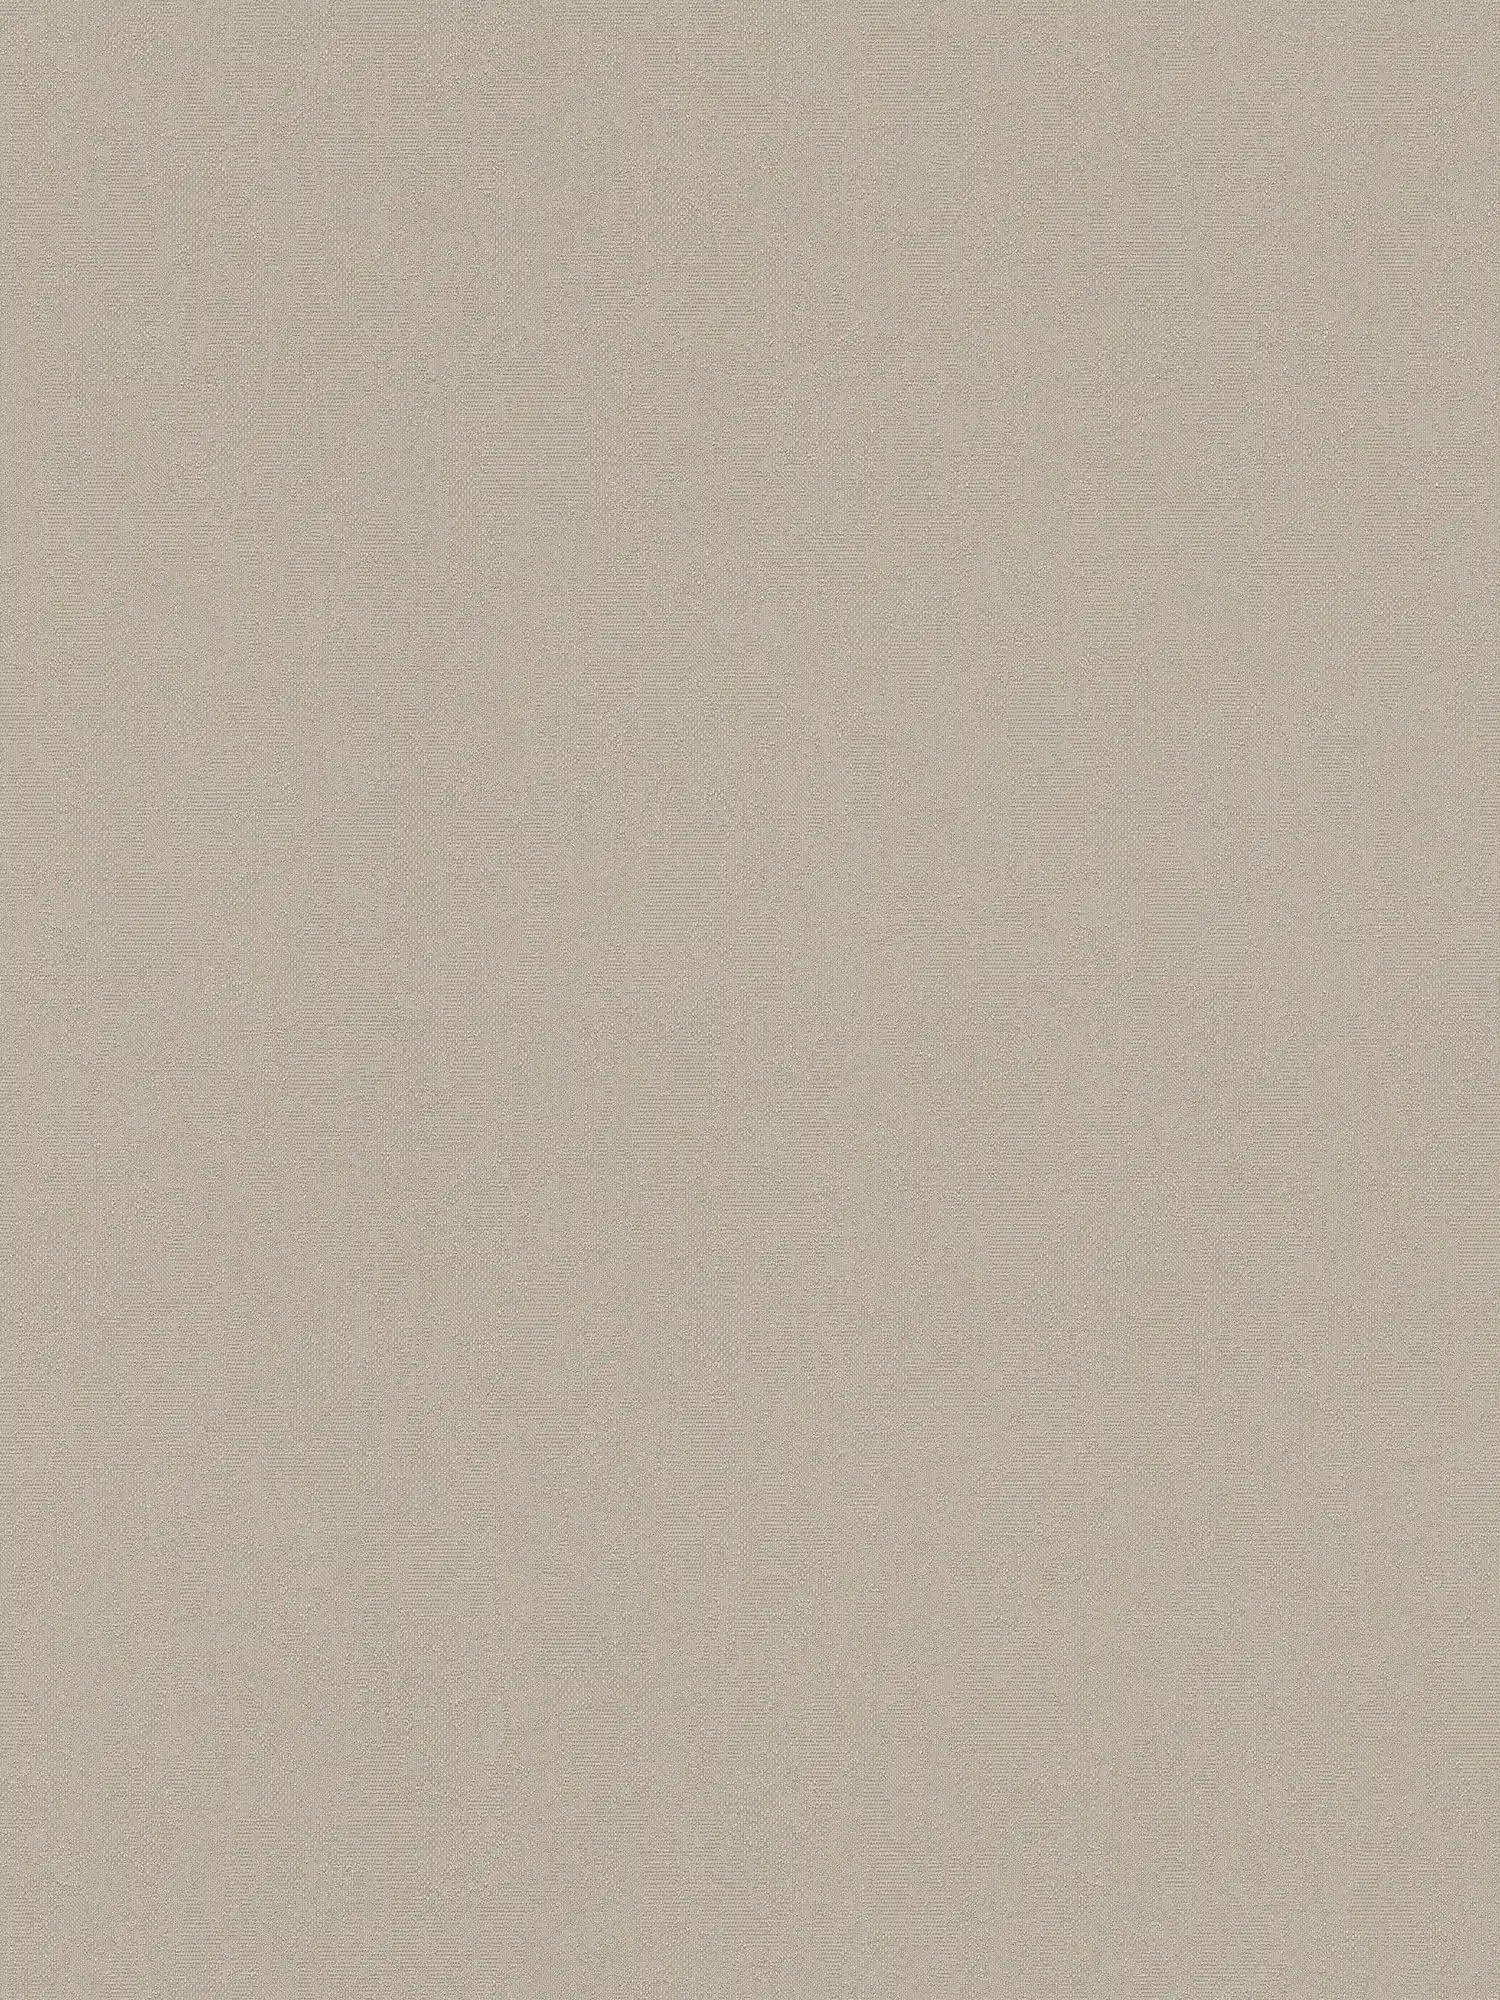 Carta da parati unitaria neutra grigio-beige con superficie strutturata
